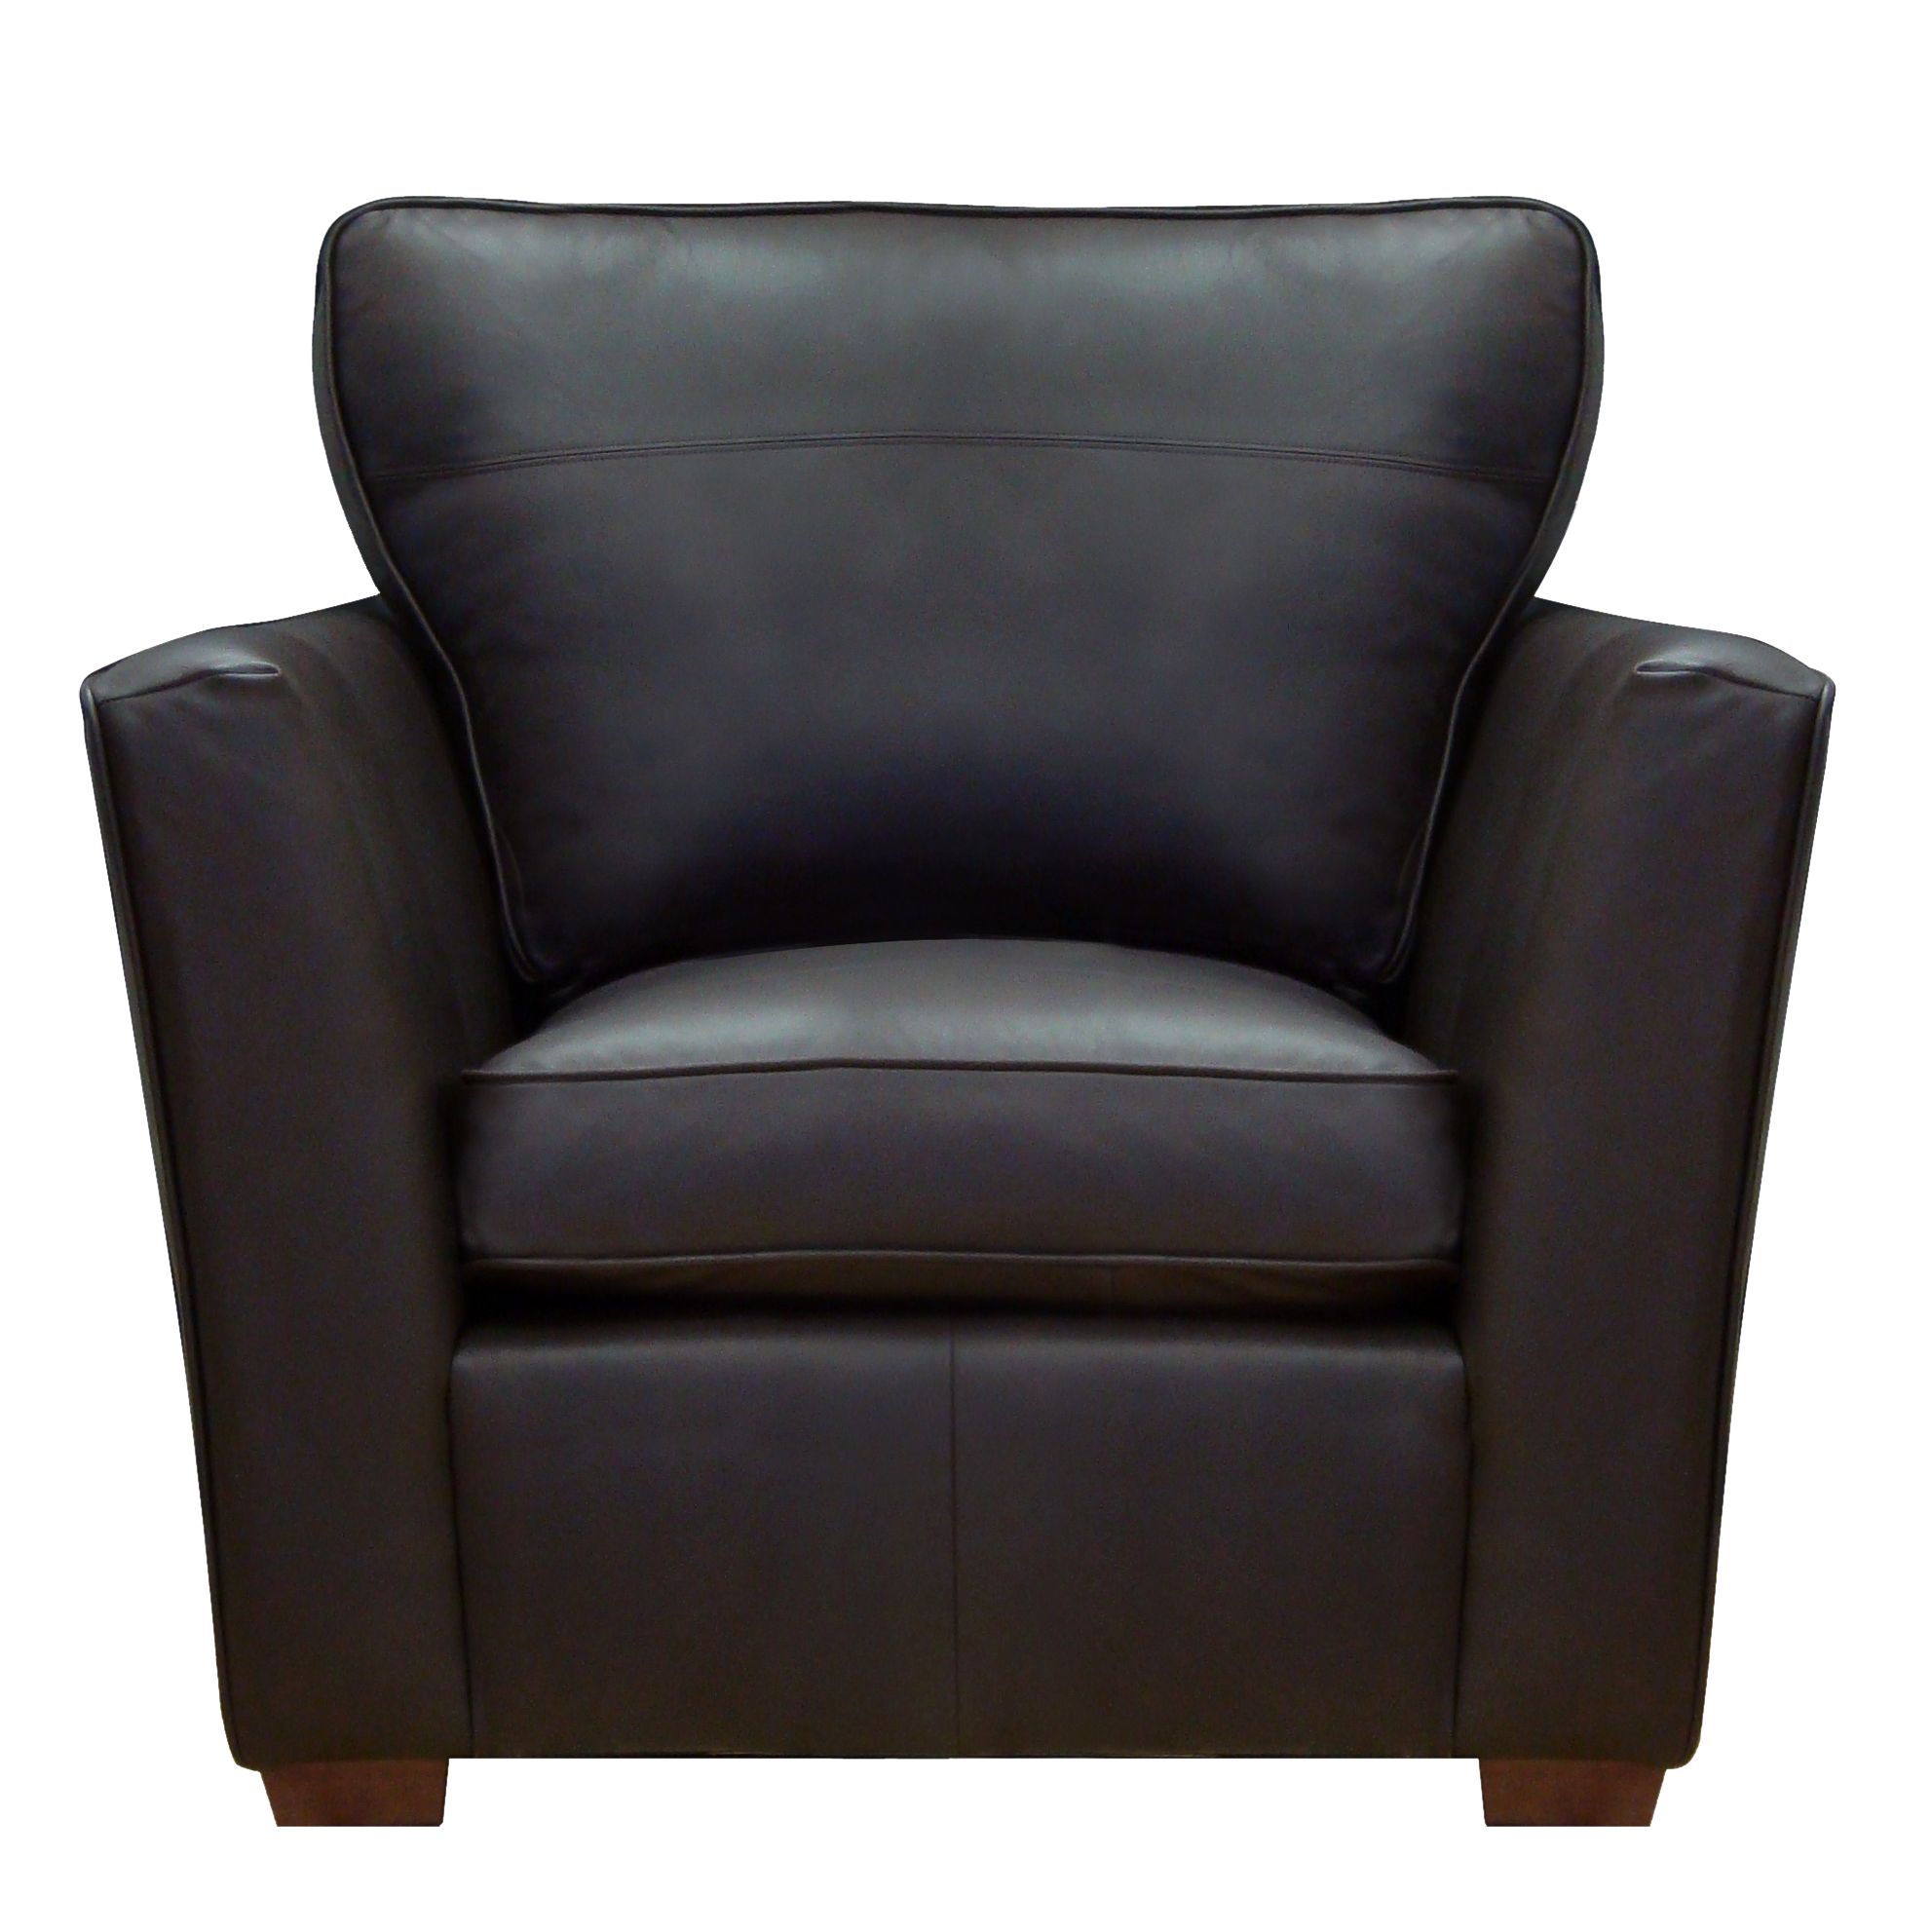 John Lewis Nantes Chair, Oltan Leather Hide 348948